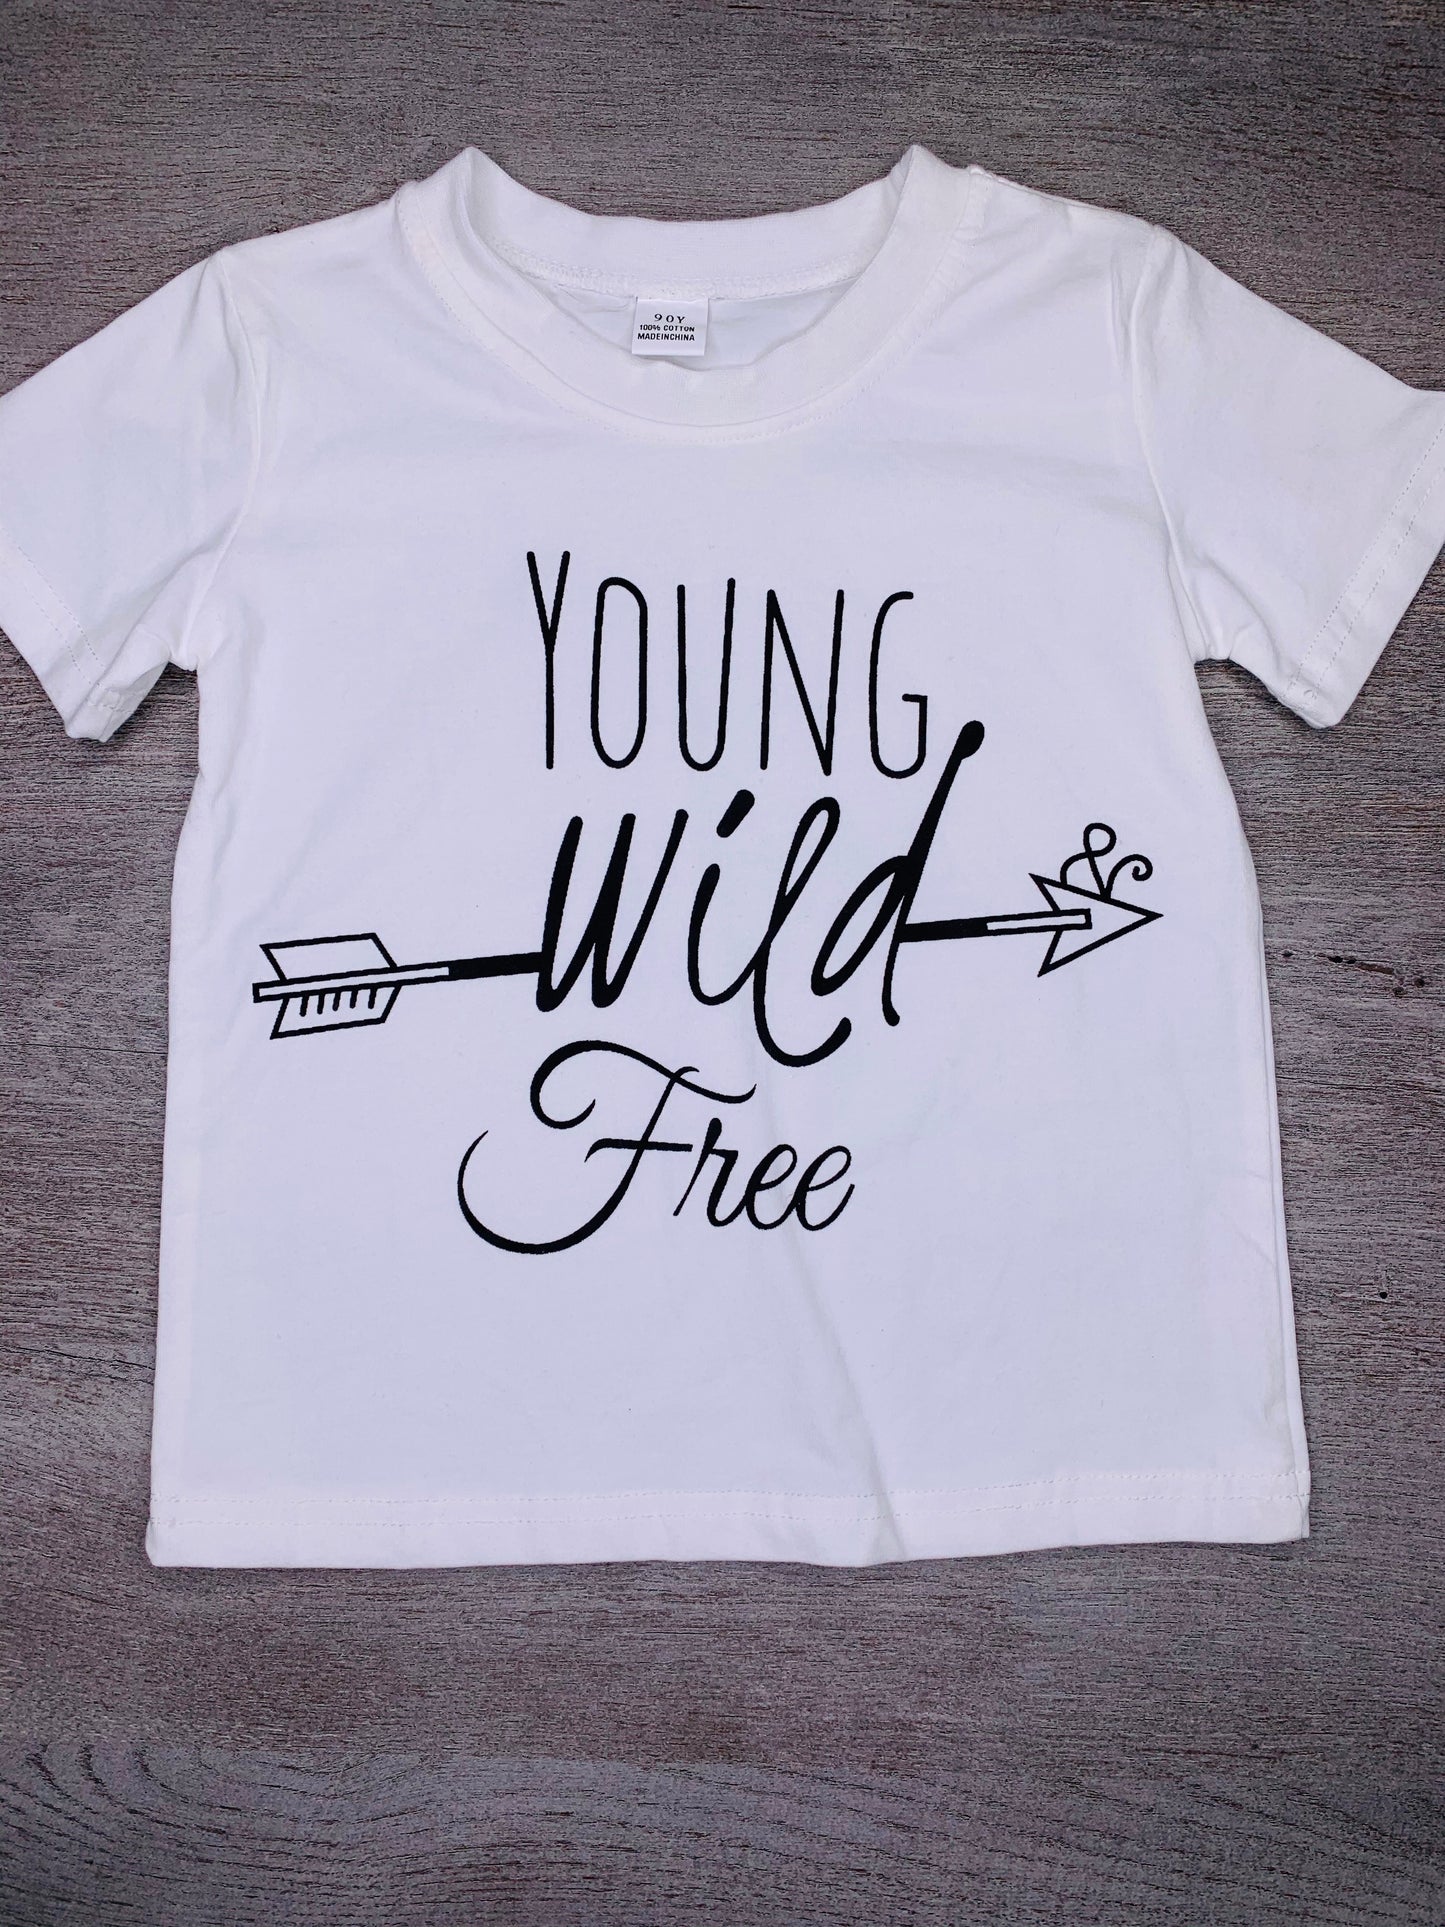 Young Wild Free Shirt*